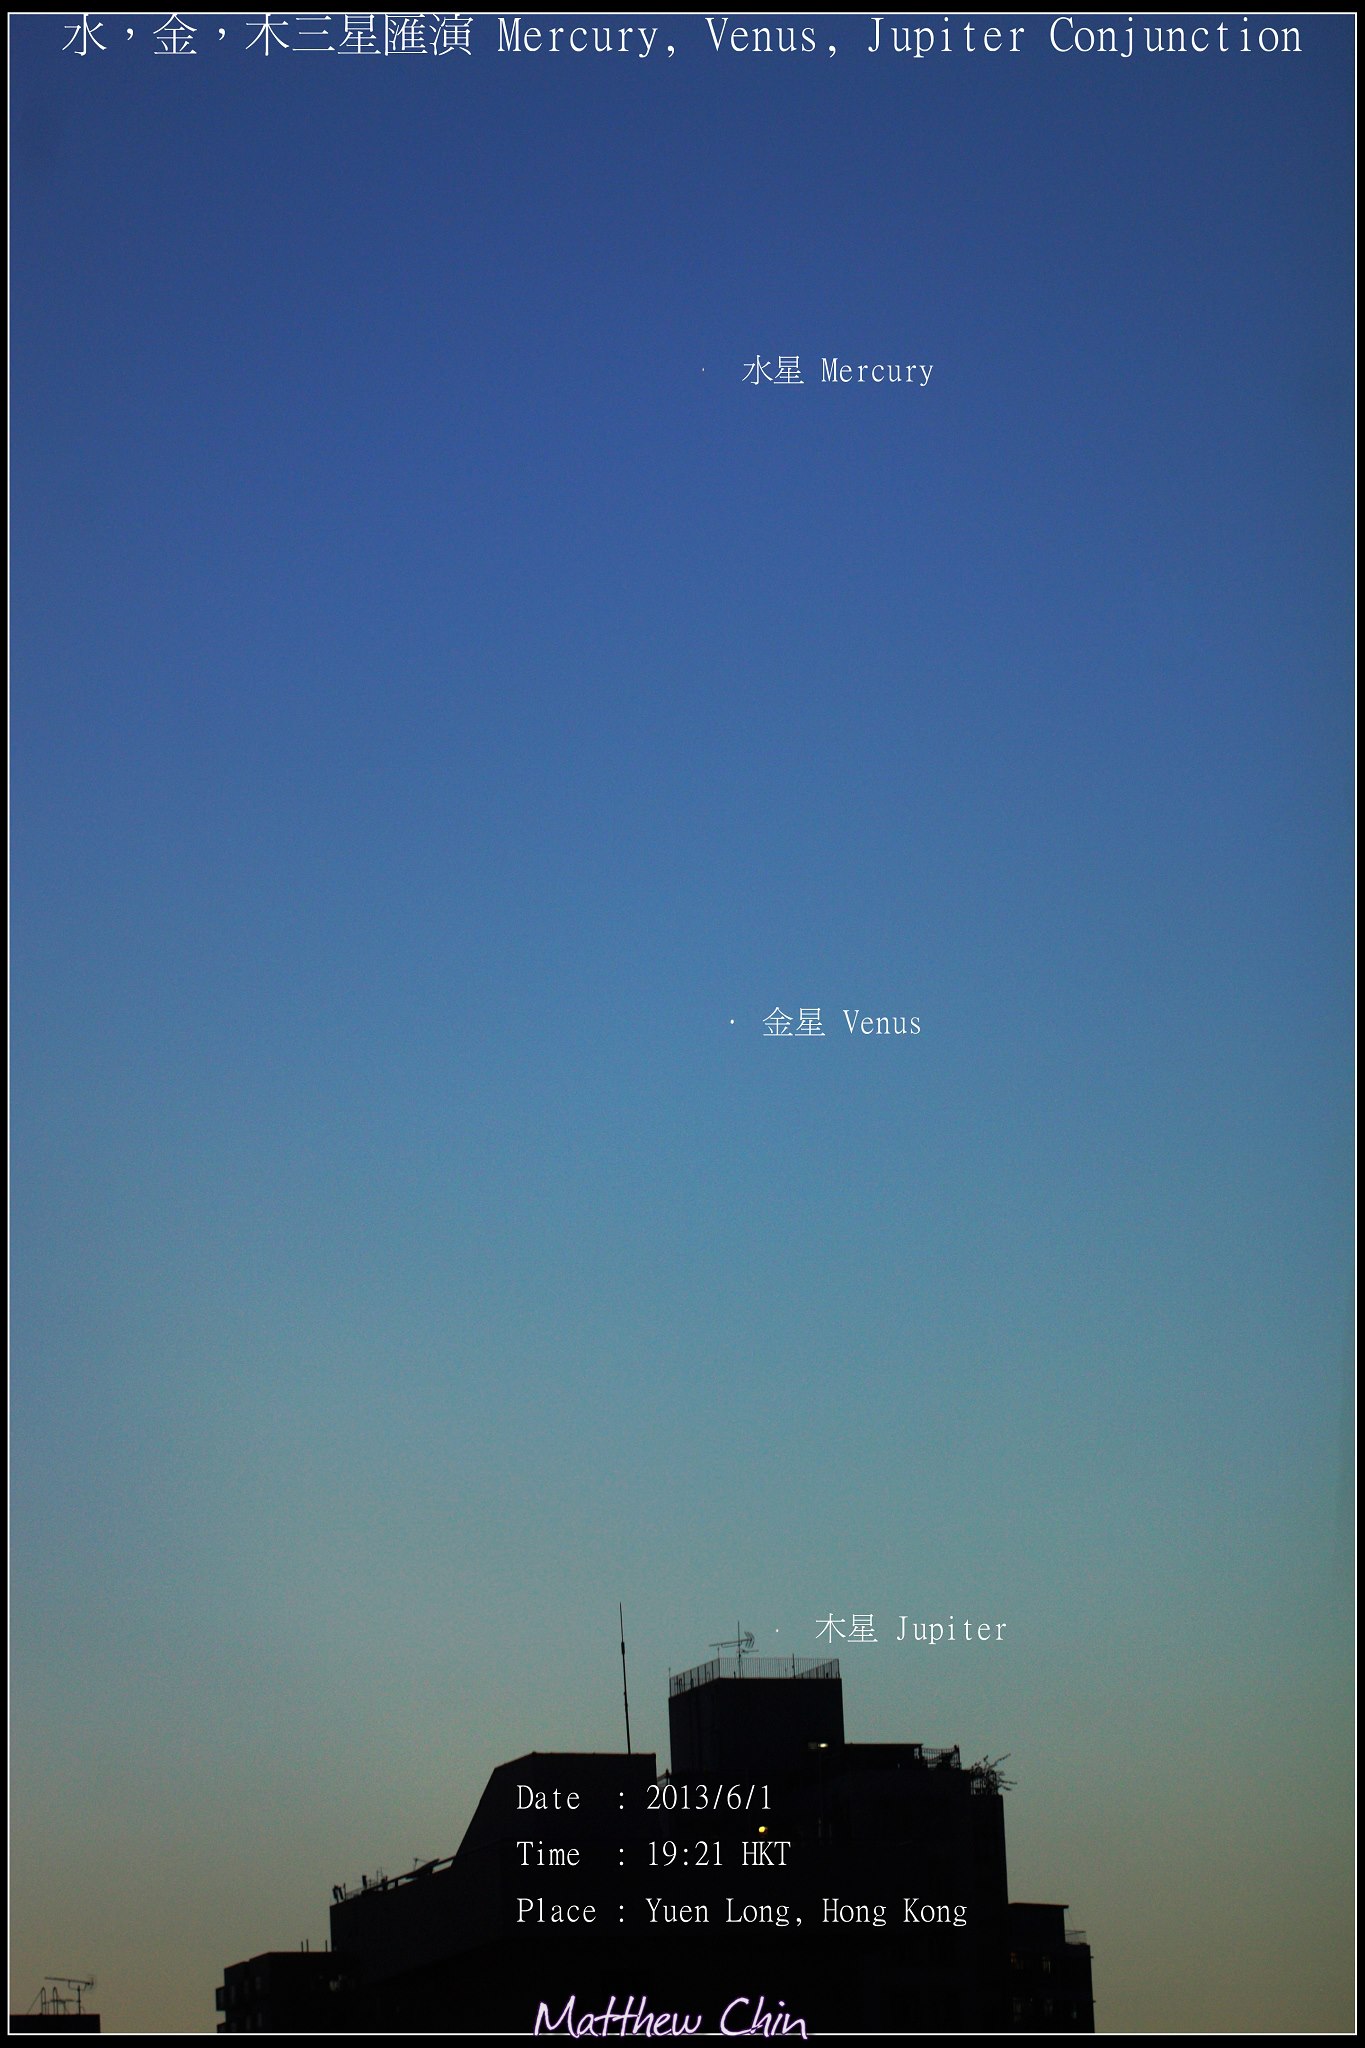 View larger. | Mercury, Venus and Jupiter seen when evening fell in Hong Kong earlier today - June 1, 2013 - by EarthSky Facebook friend Matthew Chin.  Awesome shot, Matthew!